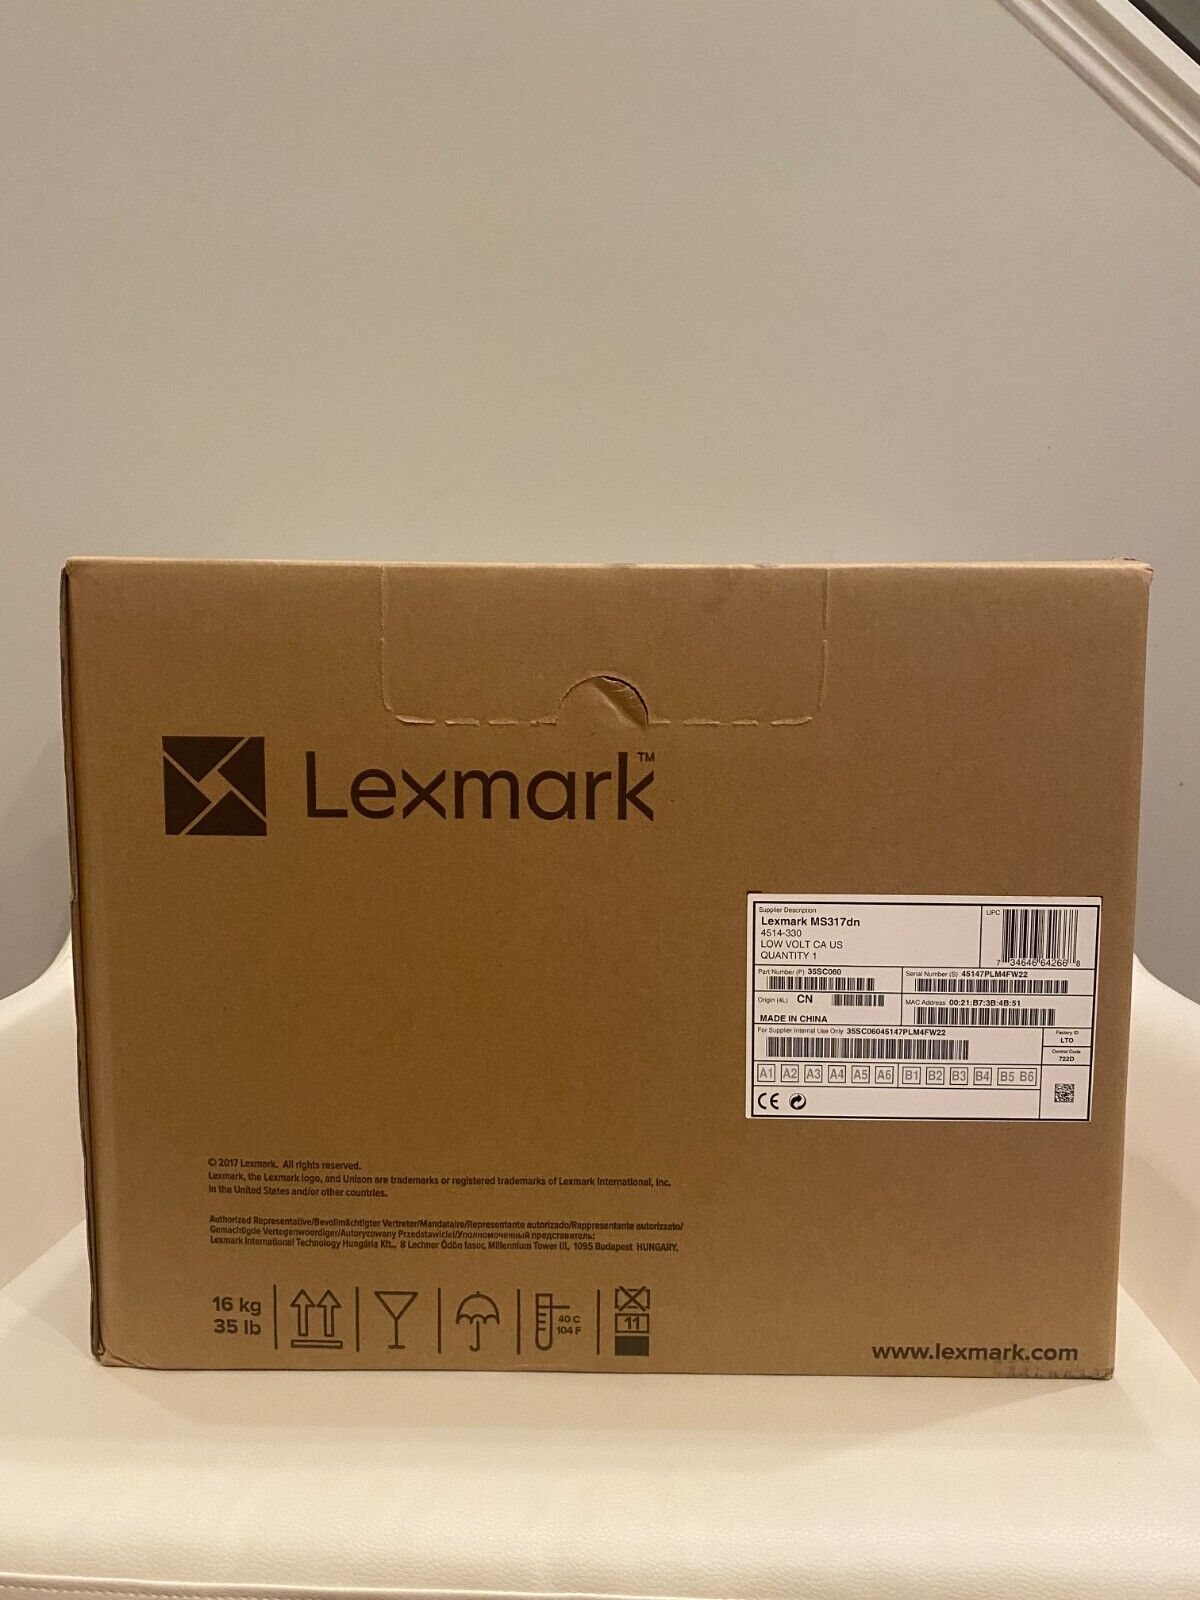 Lexmark 35SC060 MS317dn Compact Laser Printer, Monochrome, Networking, Brand New